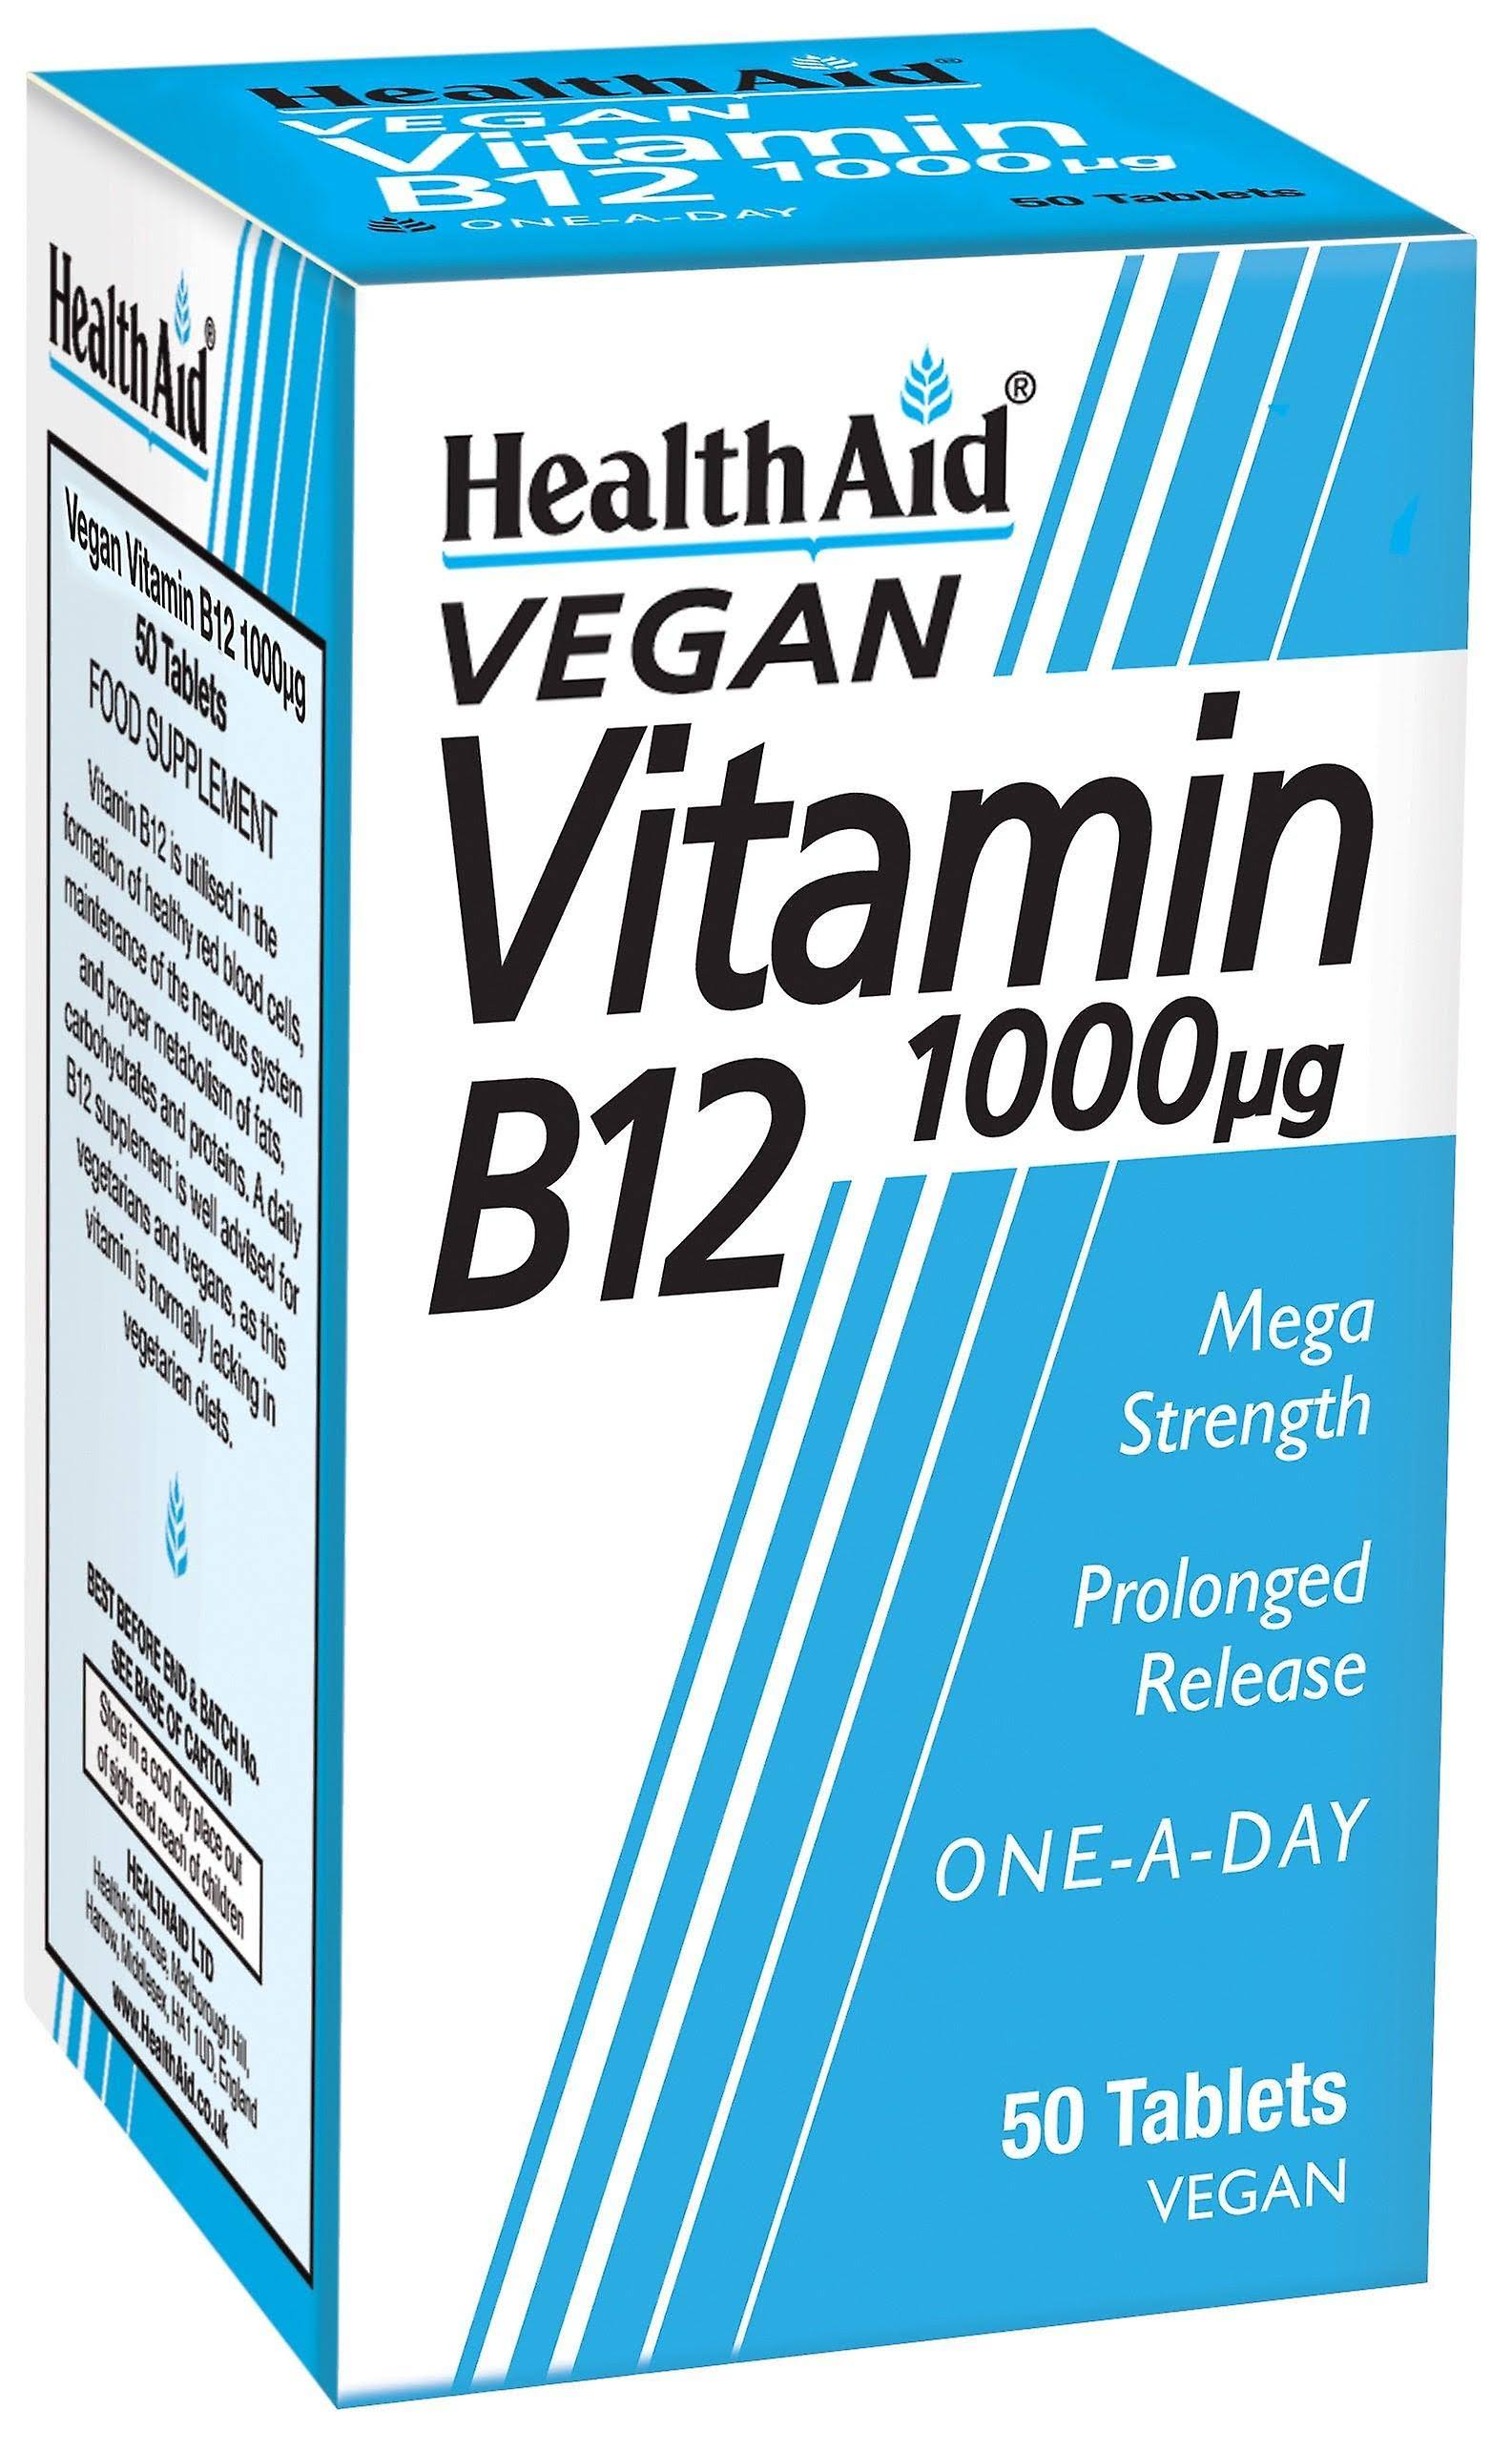 Health Aid Vitamin B12 (Cyanocobalamin) - 1000ug PR, 50 Tablets